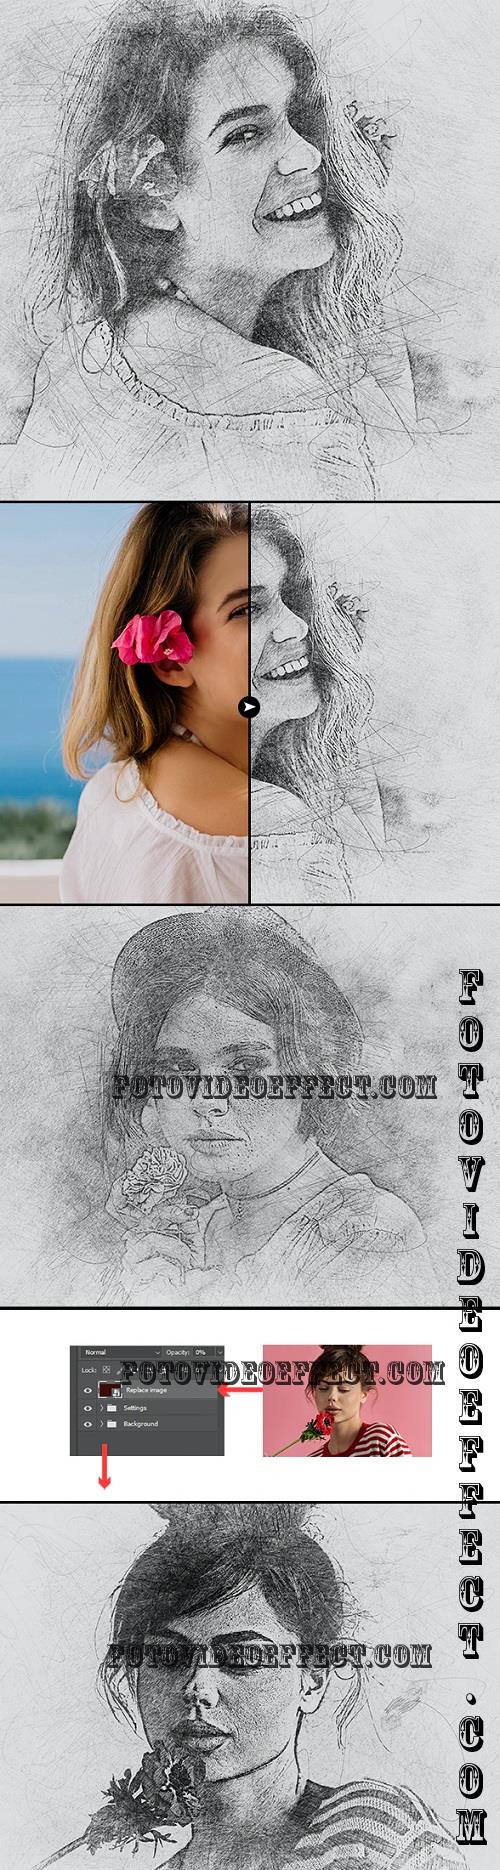 Sketching Photo Effect - 48044528